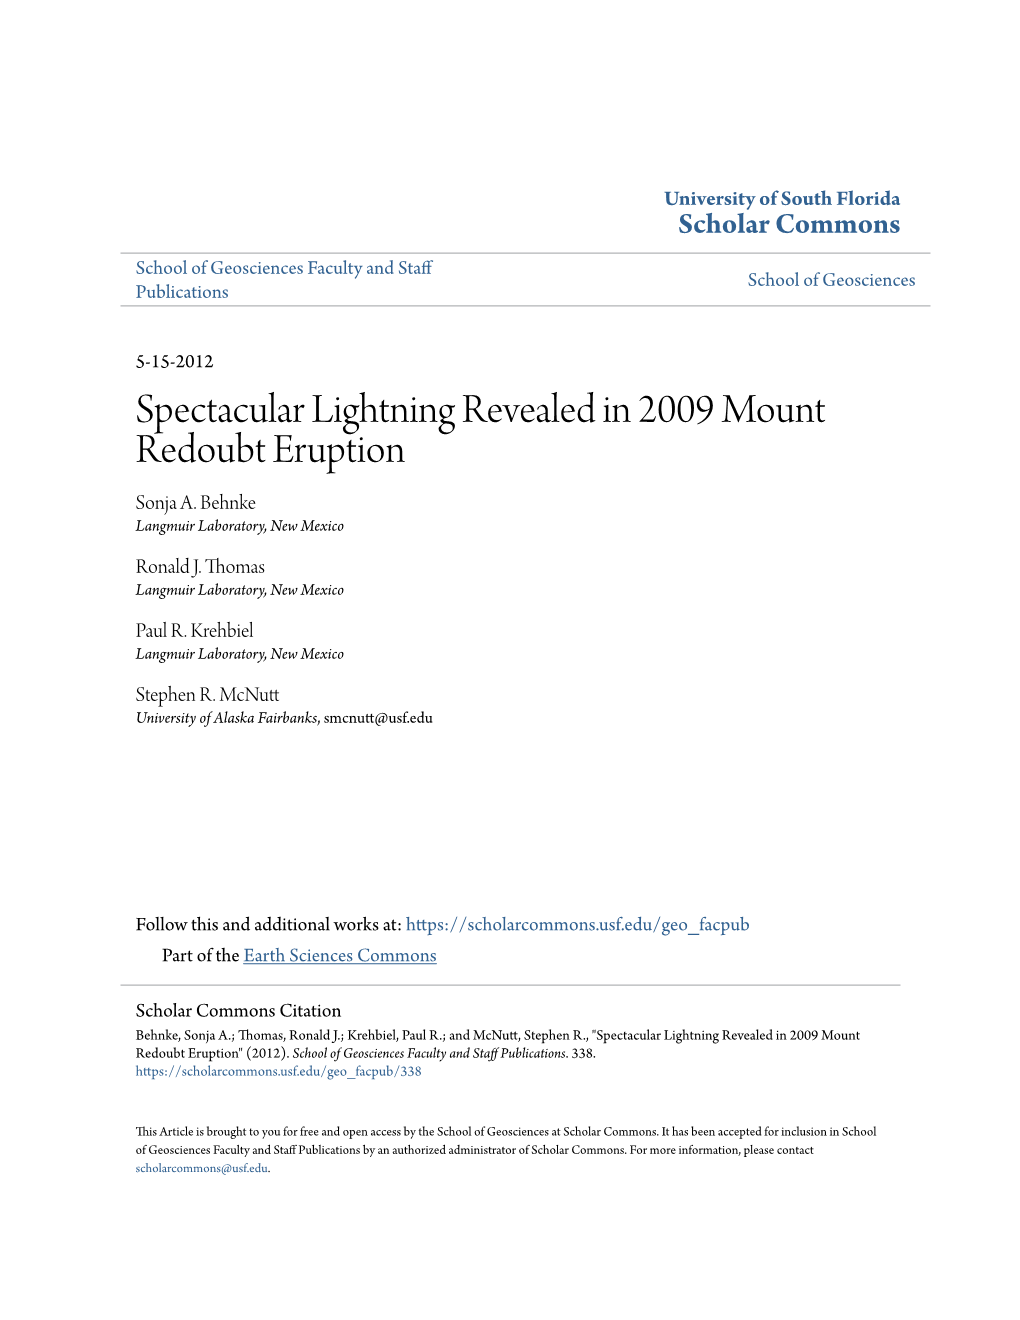 Spectacular Lightning Revealed in 2009 Mount Redoubt Eruption Sonja A